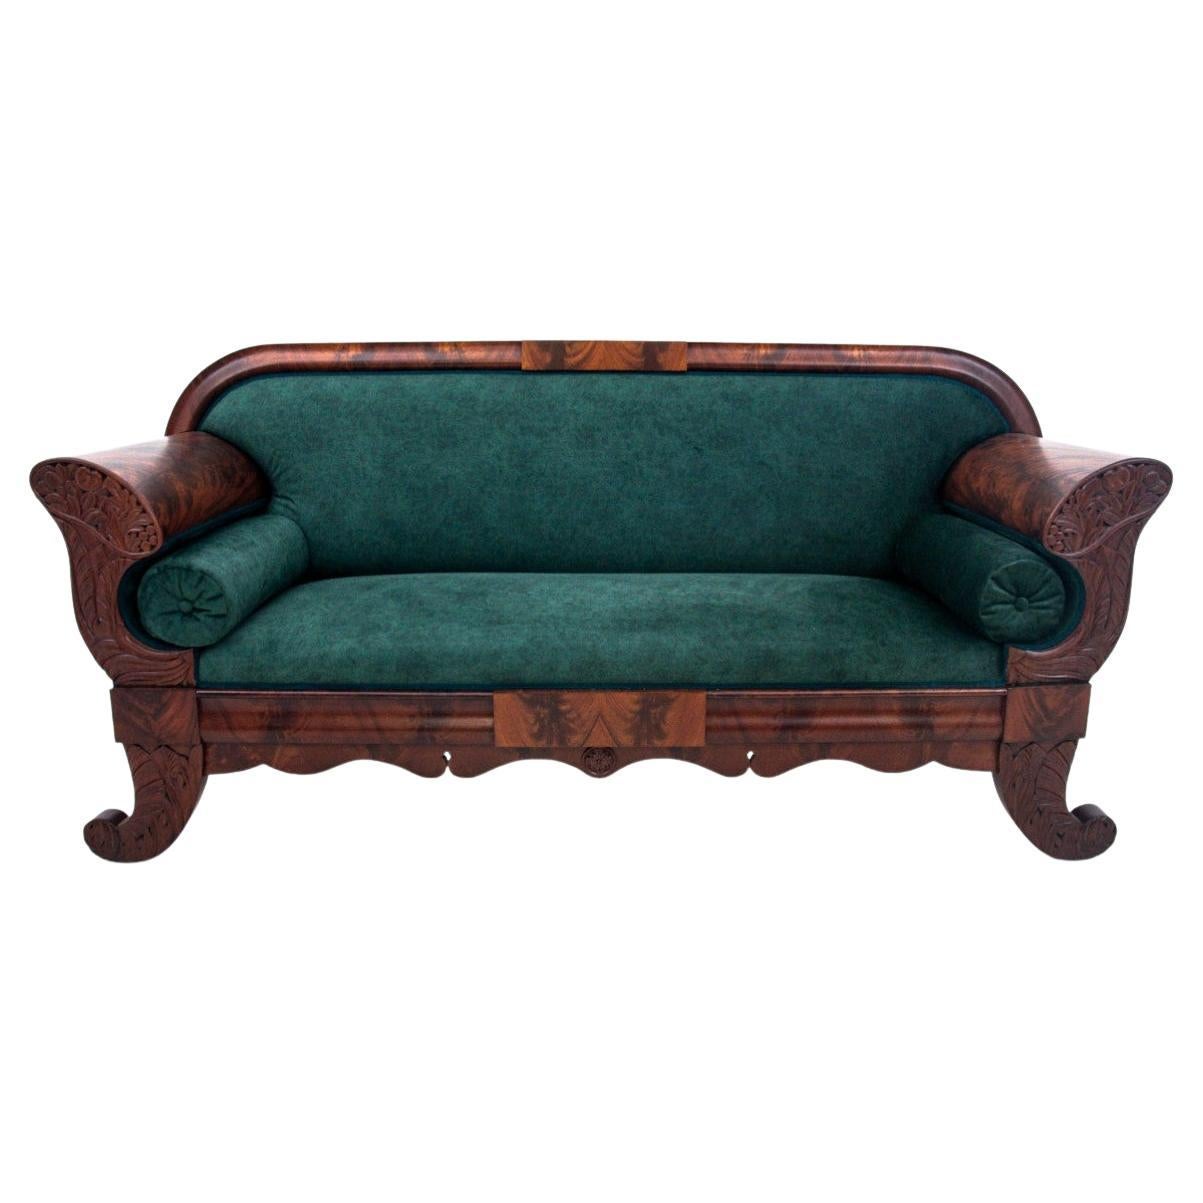 Antique Biedermeier Green Sofa, Scandinavia, 1890s, Restored